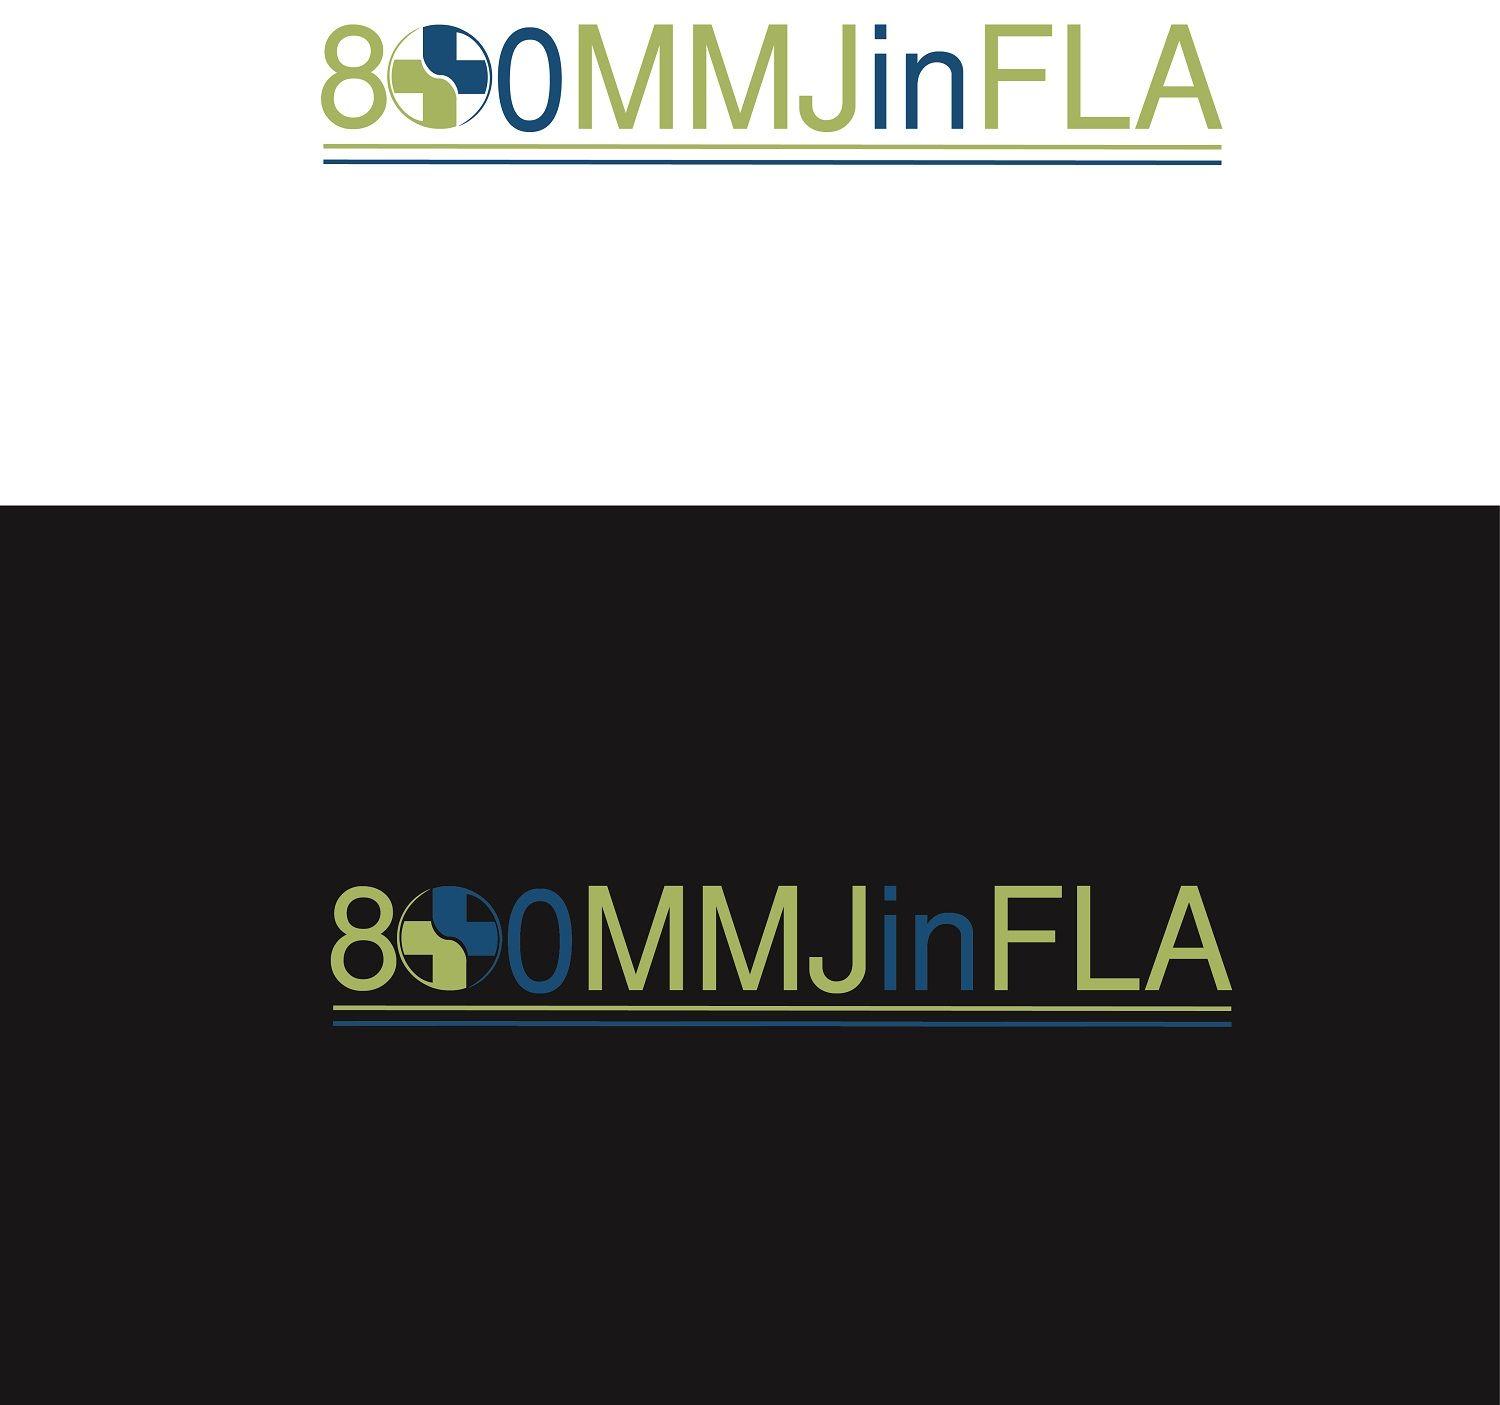 Generic Medical Logo - Professional, Serious, Medical Logo Design for 800MMJinFLA